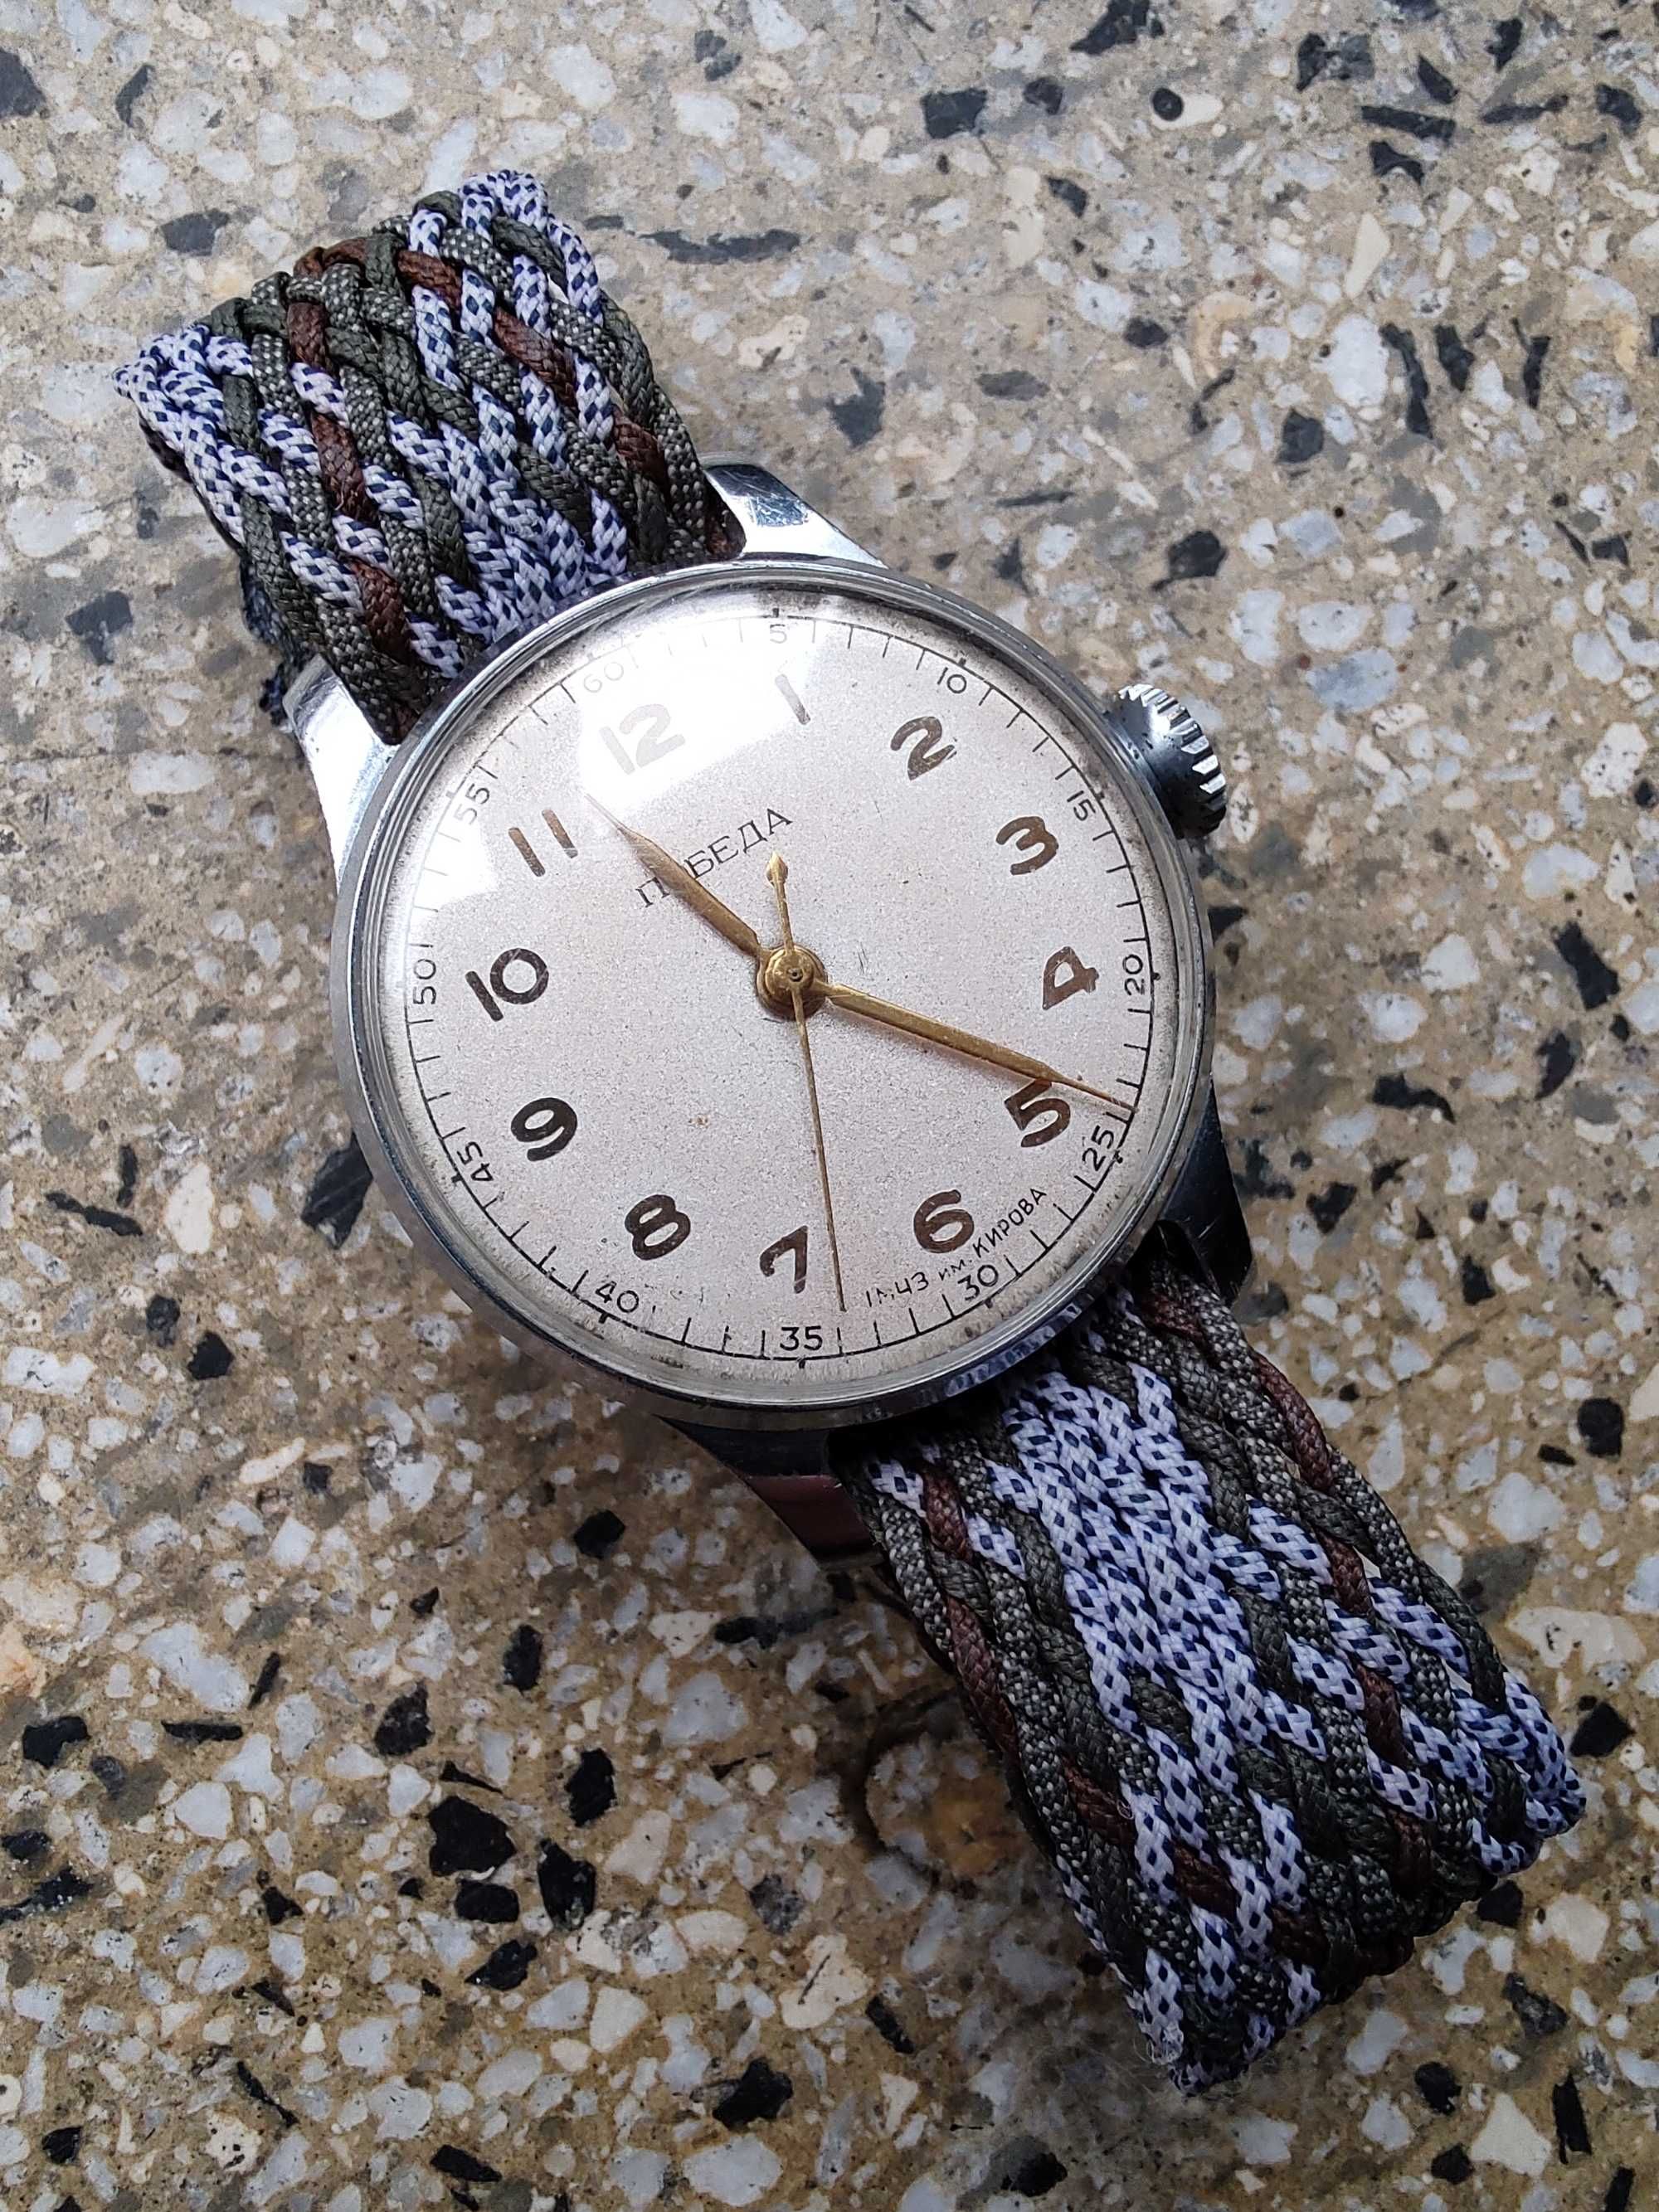 Zegarek mechaniczny Pabieda (Pobeda, Pabeda, Побєда) - lata '60